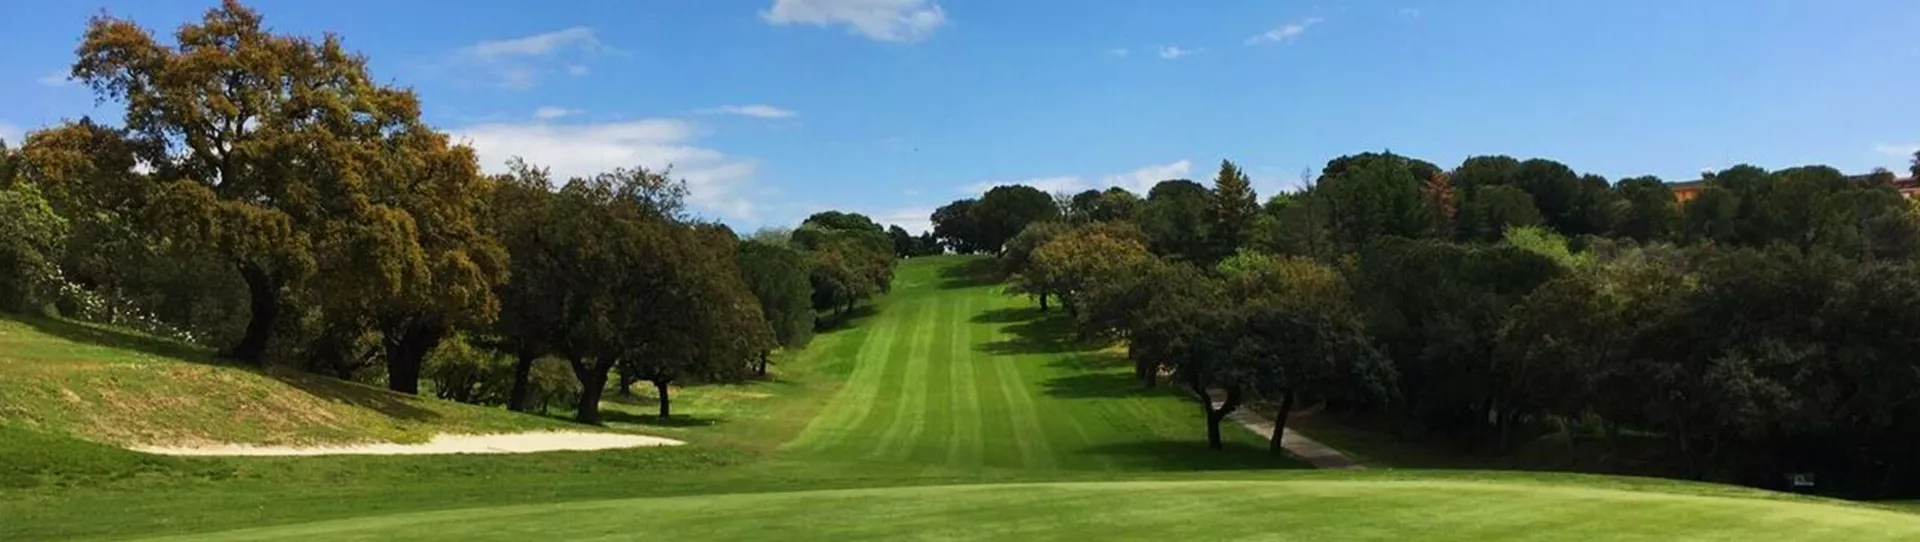 Spain golf courses - Real Club de Campo de Cordoba - Photo 1